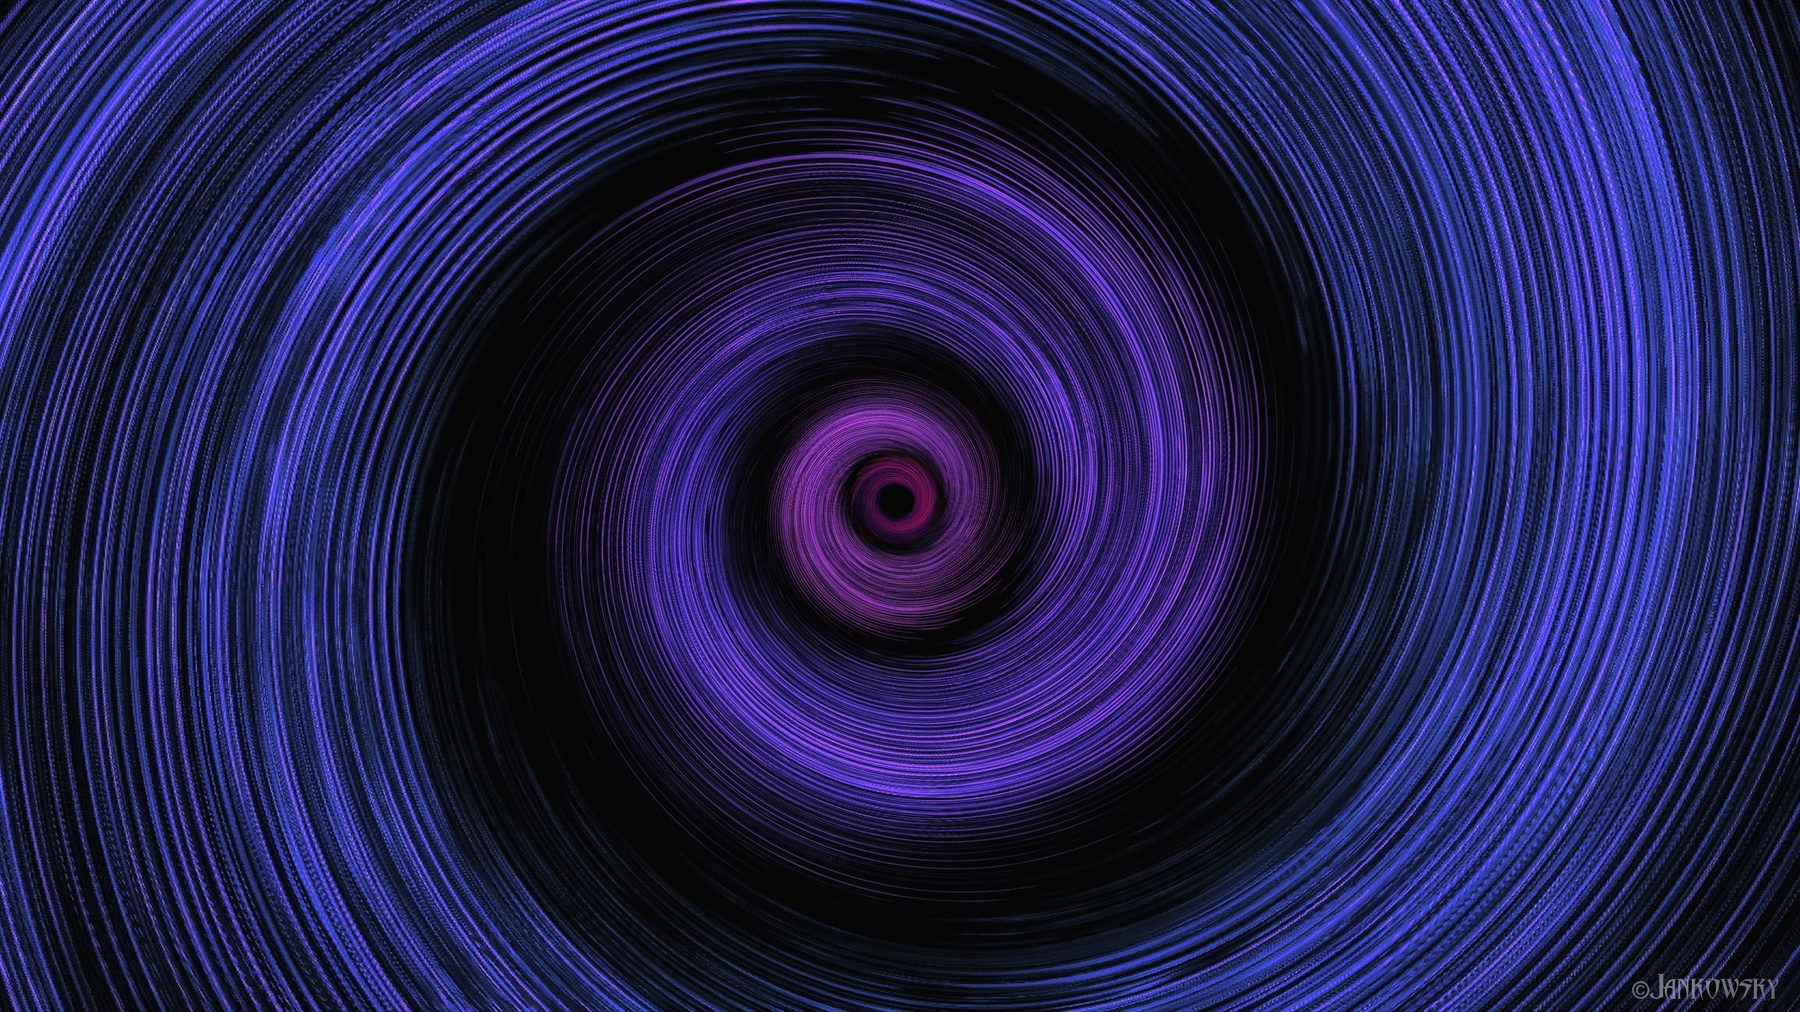 Hypnotic Vortex Spiral-shaped Fractal Structure - Abstract macro Hypnotic Vortex spiral fractal shape фрактал психоделика концептуальное макро морфинг маджента кислота